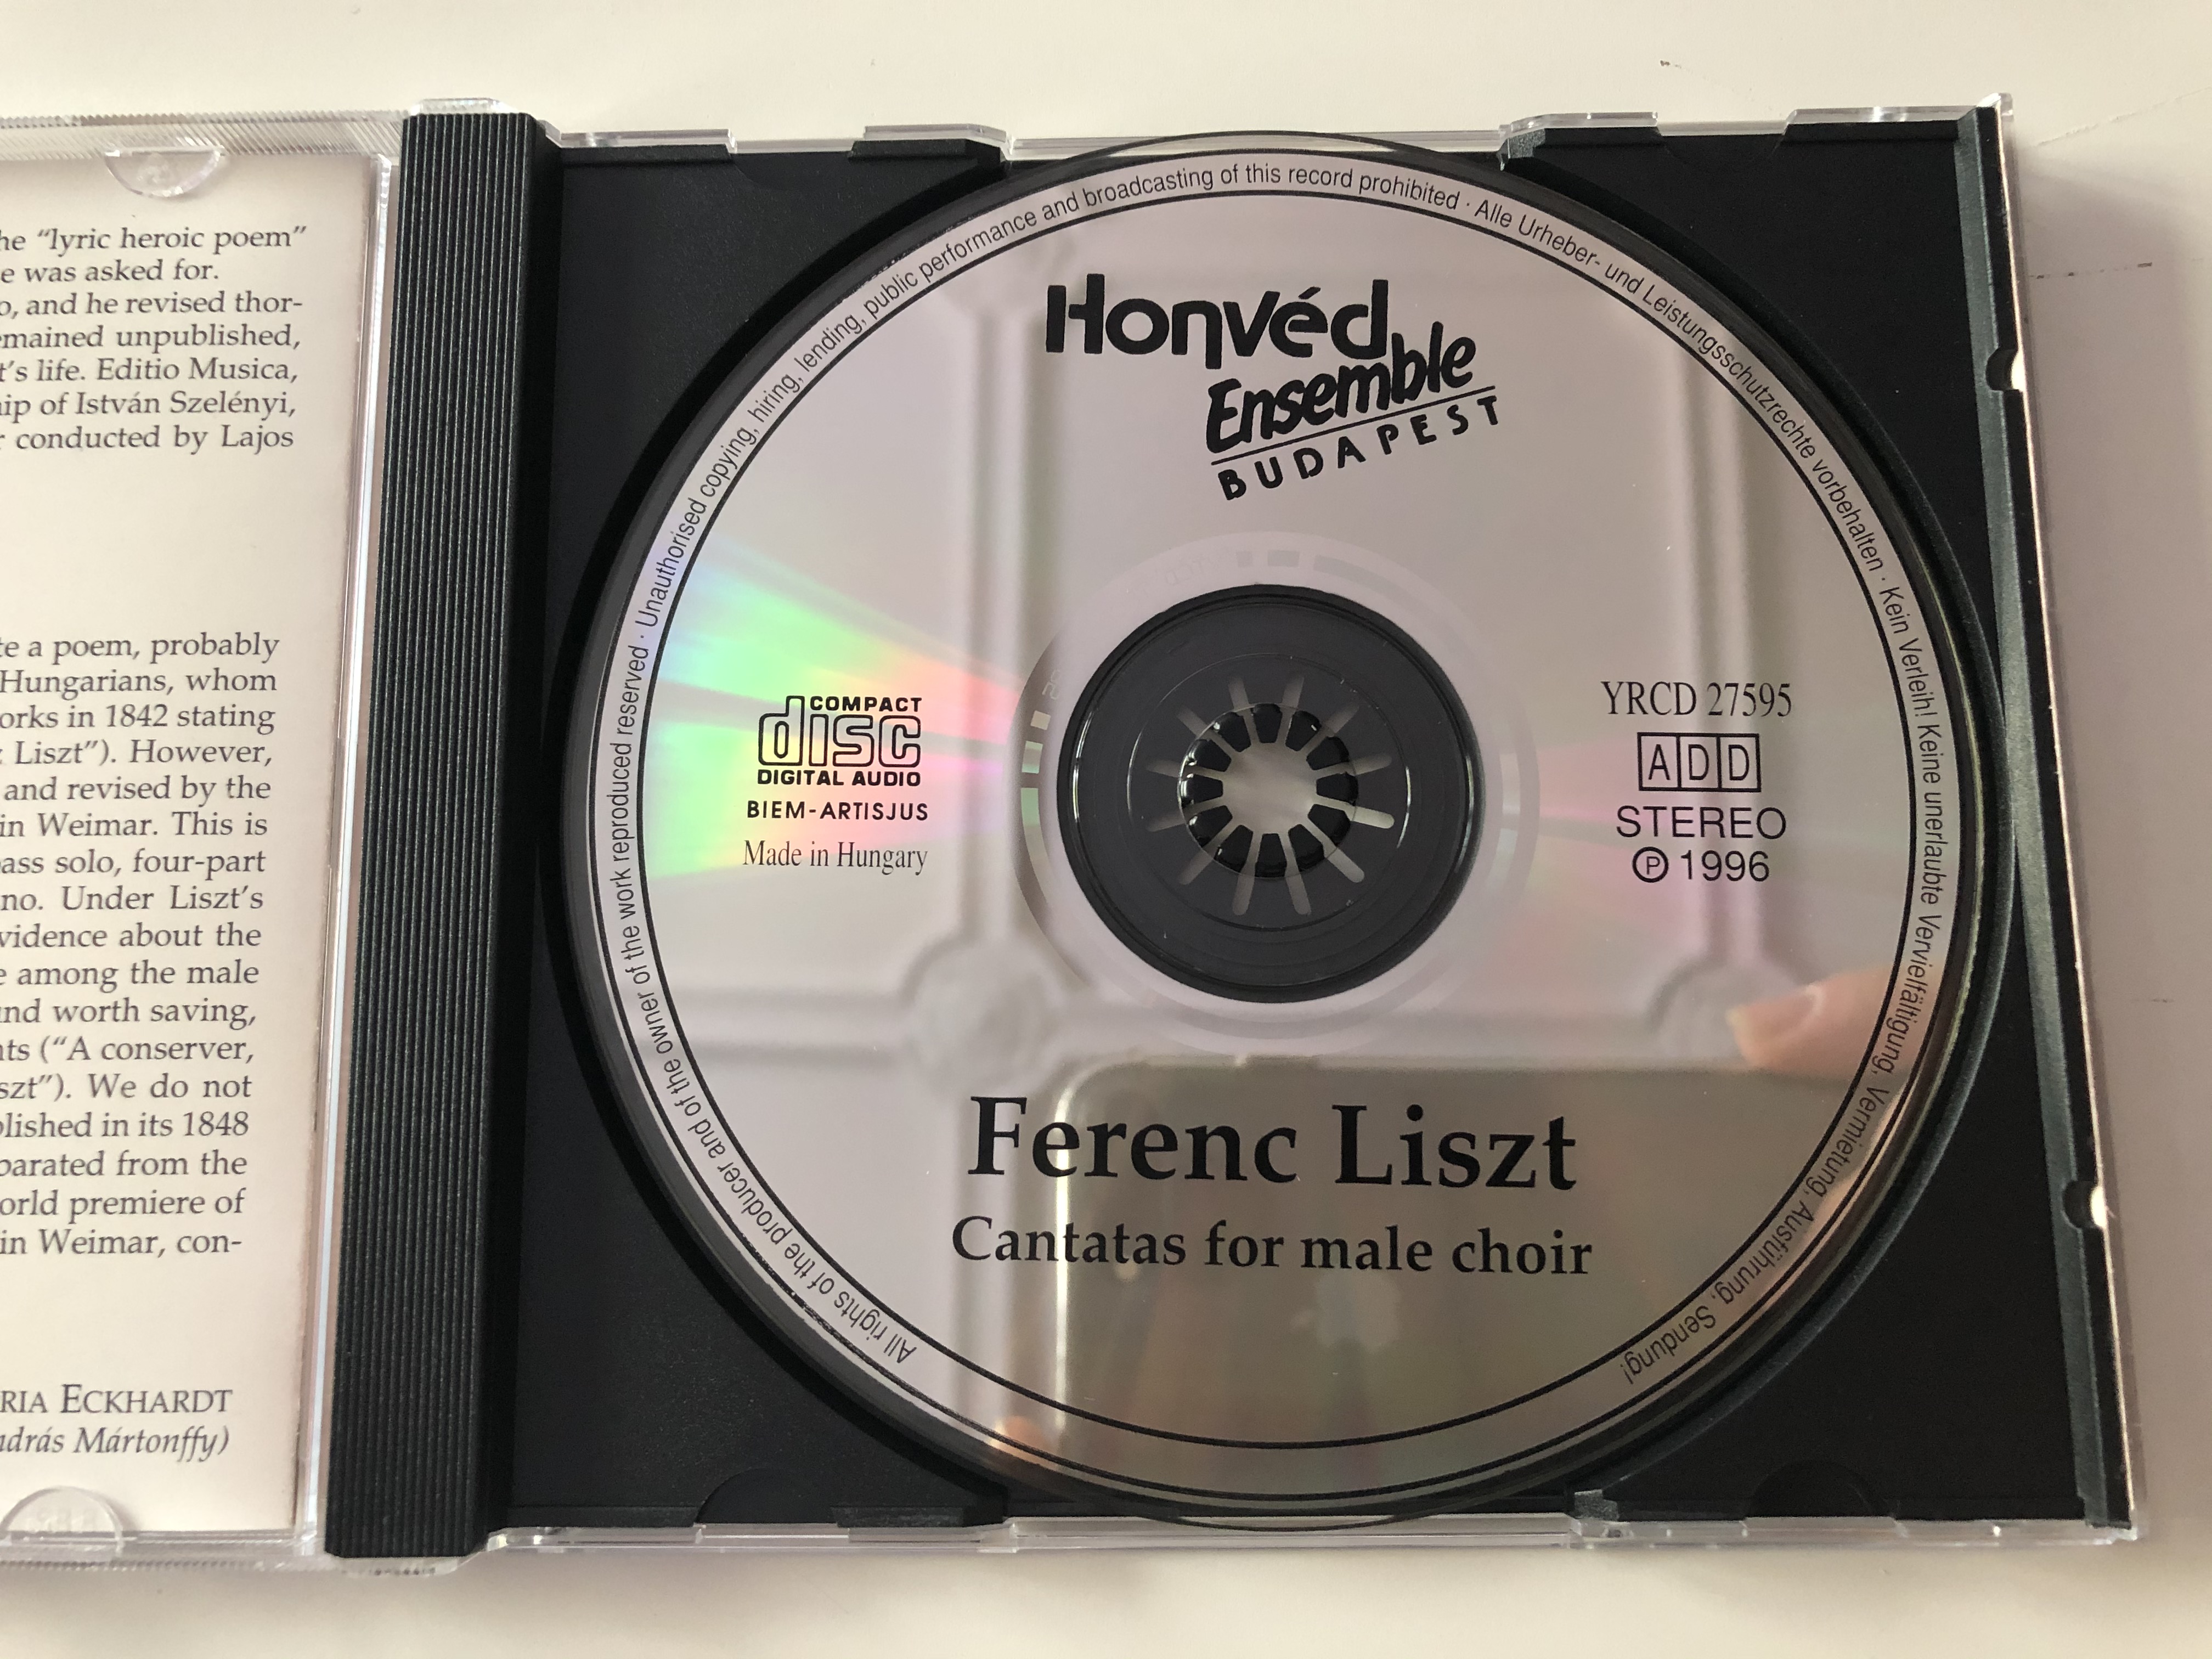 liszt-ferenc-ferfikari-kantatai-cantatas-for-male-choir-by-ferenc-liszt-honved-egyuttes-ferfikara-male-choir-of-the-honved-ensemble-yellow-records-audio-cd-1996-stereo-yrcd-27595-4-.jpg